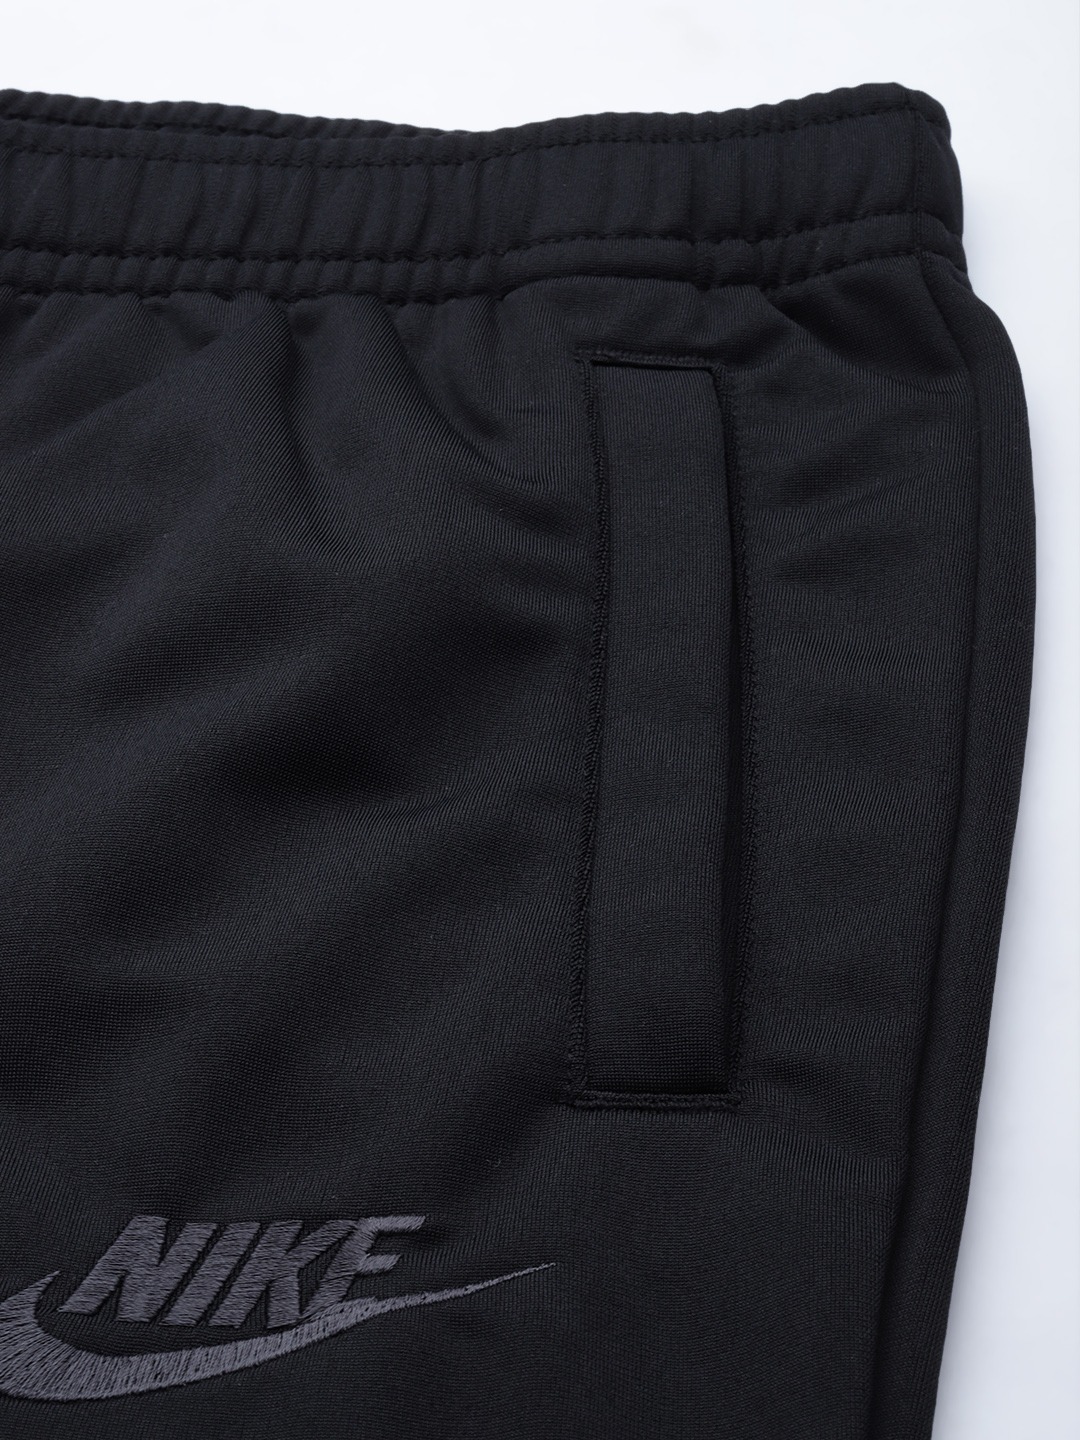 Clothing Tracksuits | Nike Men Black Brand Logo Printed Poly Knit Track Suit - KT53767